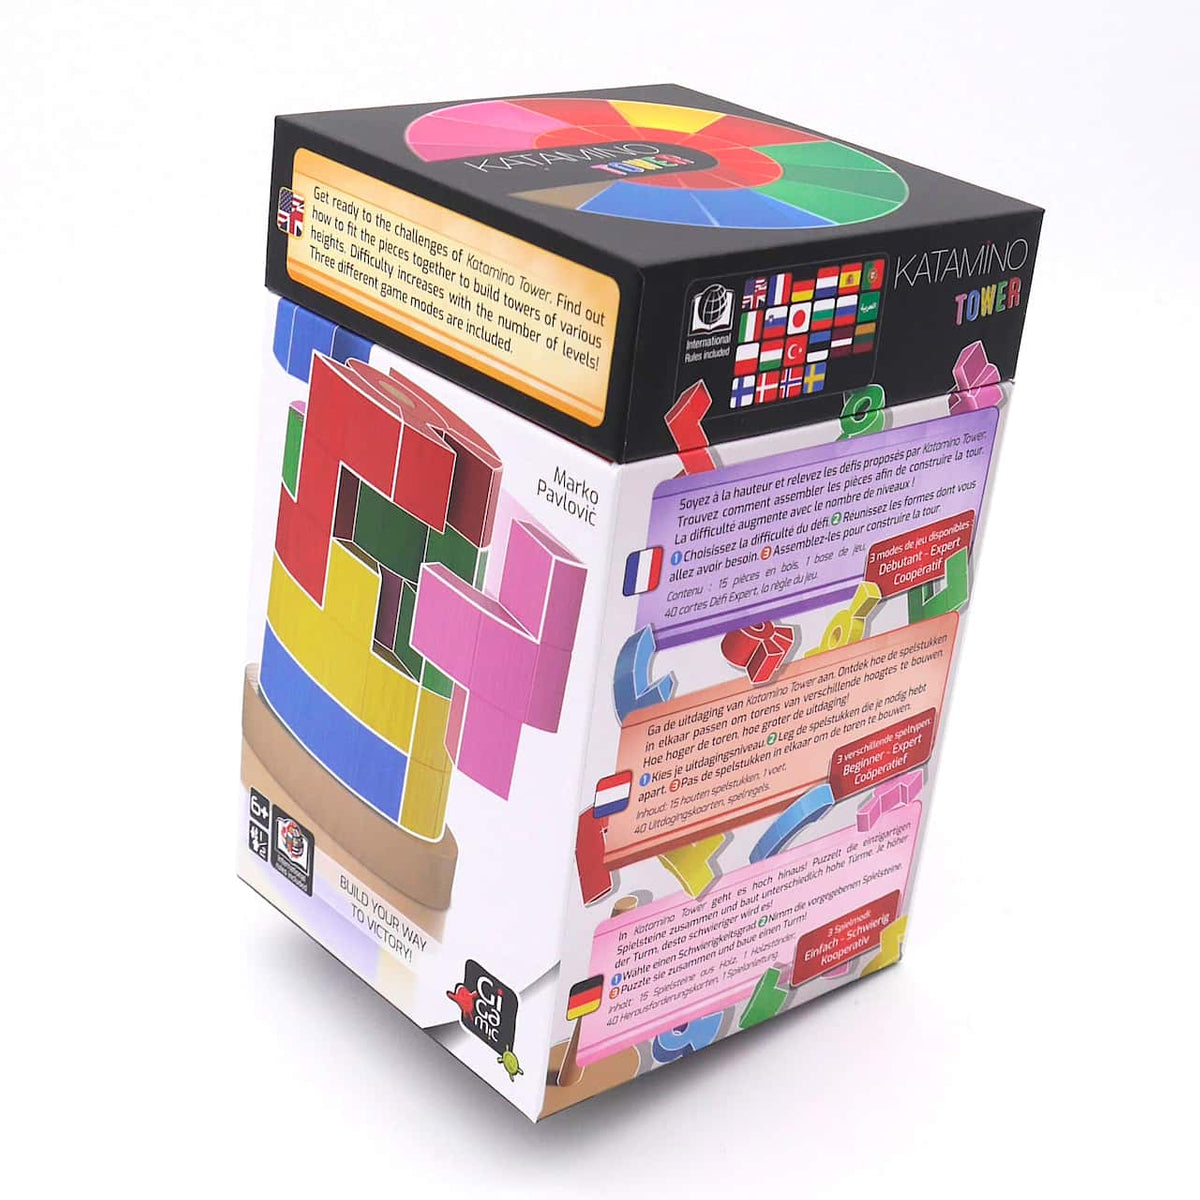 KATAMINO TOWER - vielfältiges Stapelspiel als 3D-Puzzle